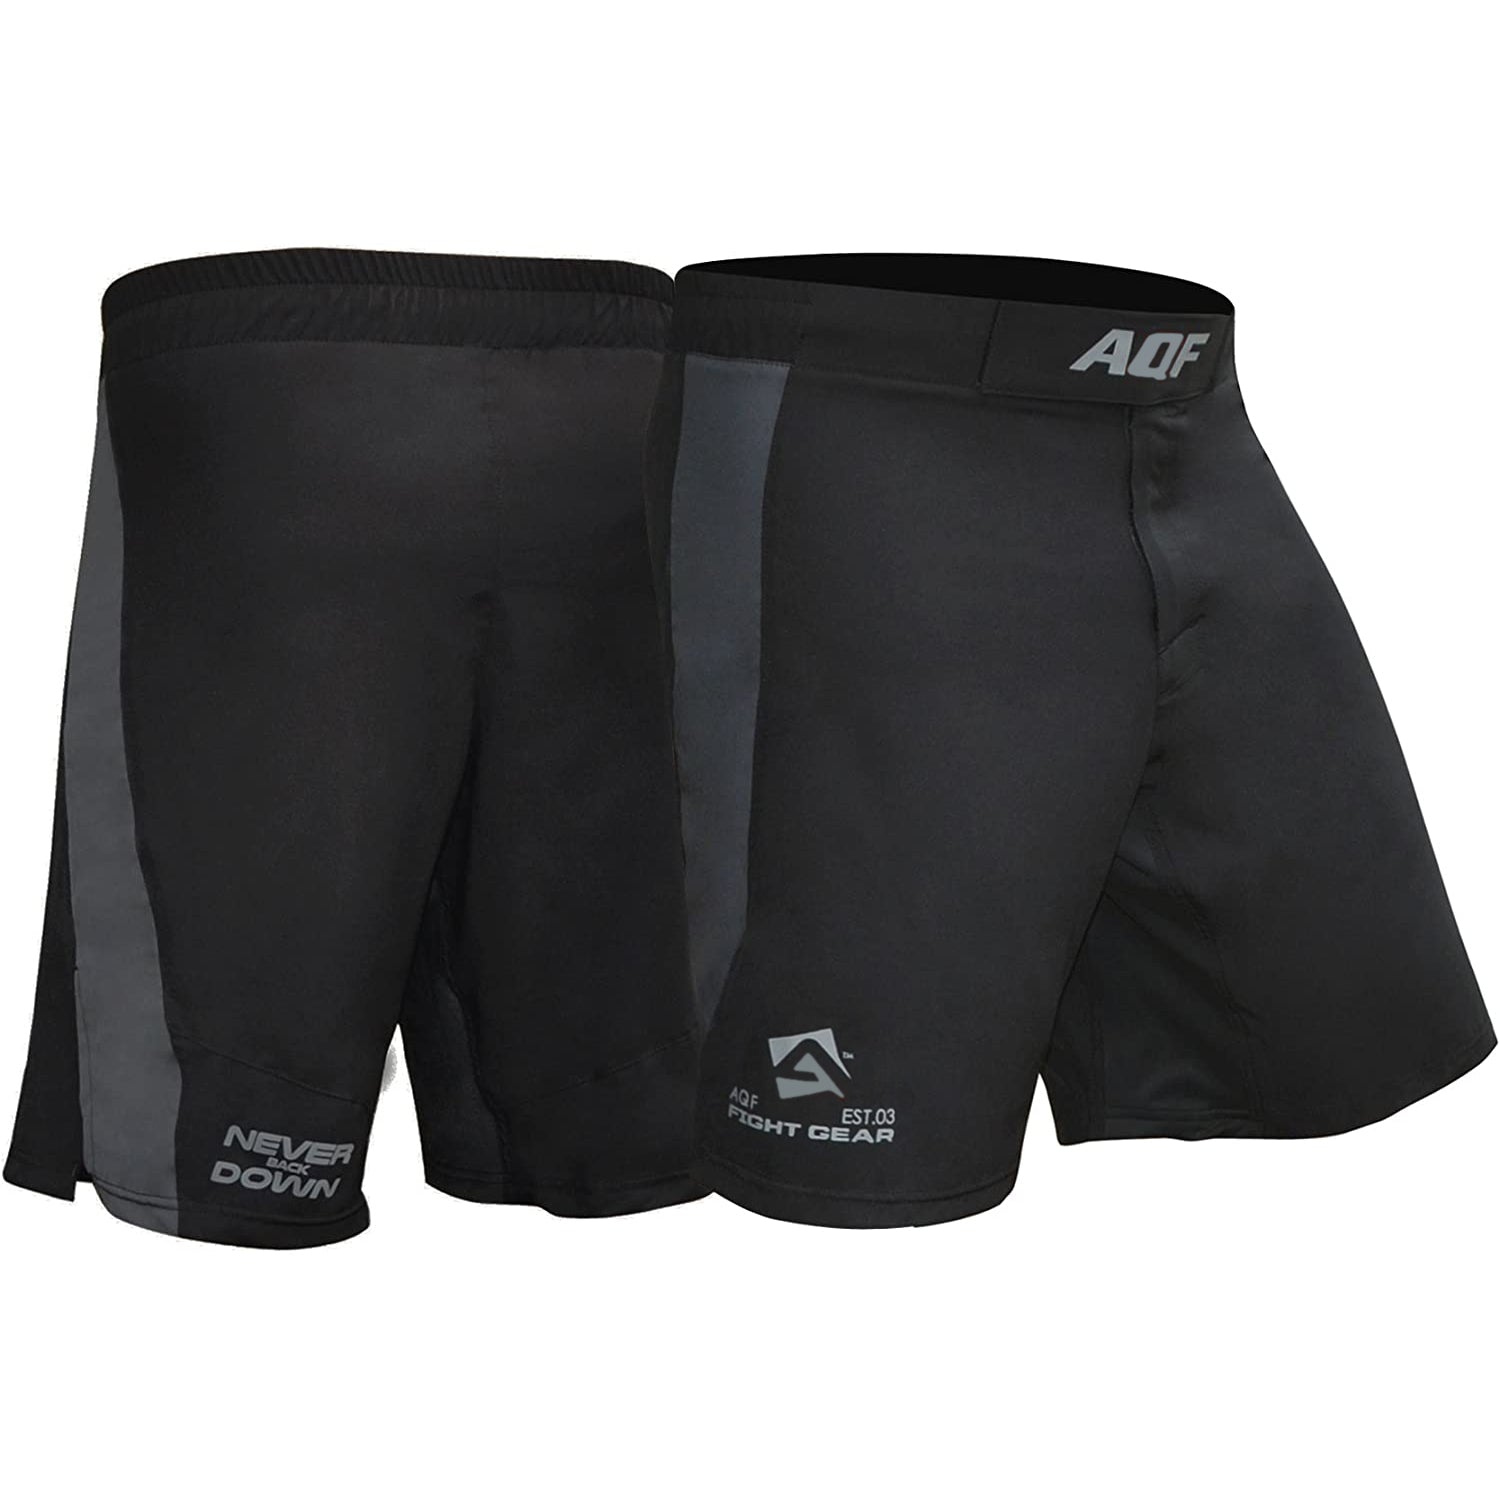 AQF Combat MMA Shorts 4-Way Stretch - AQF Sports